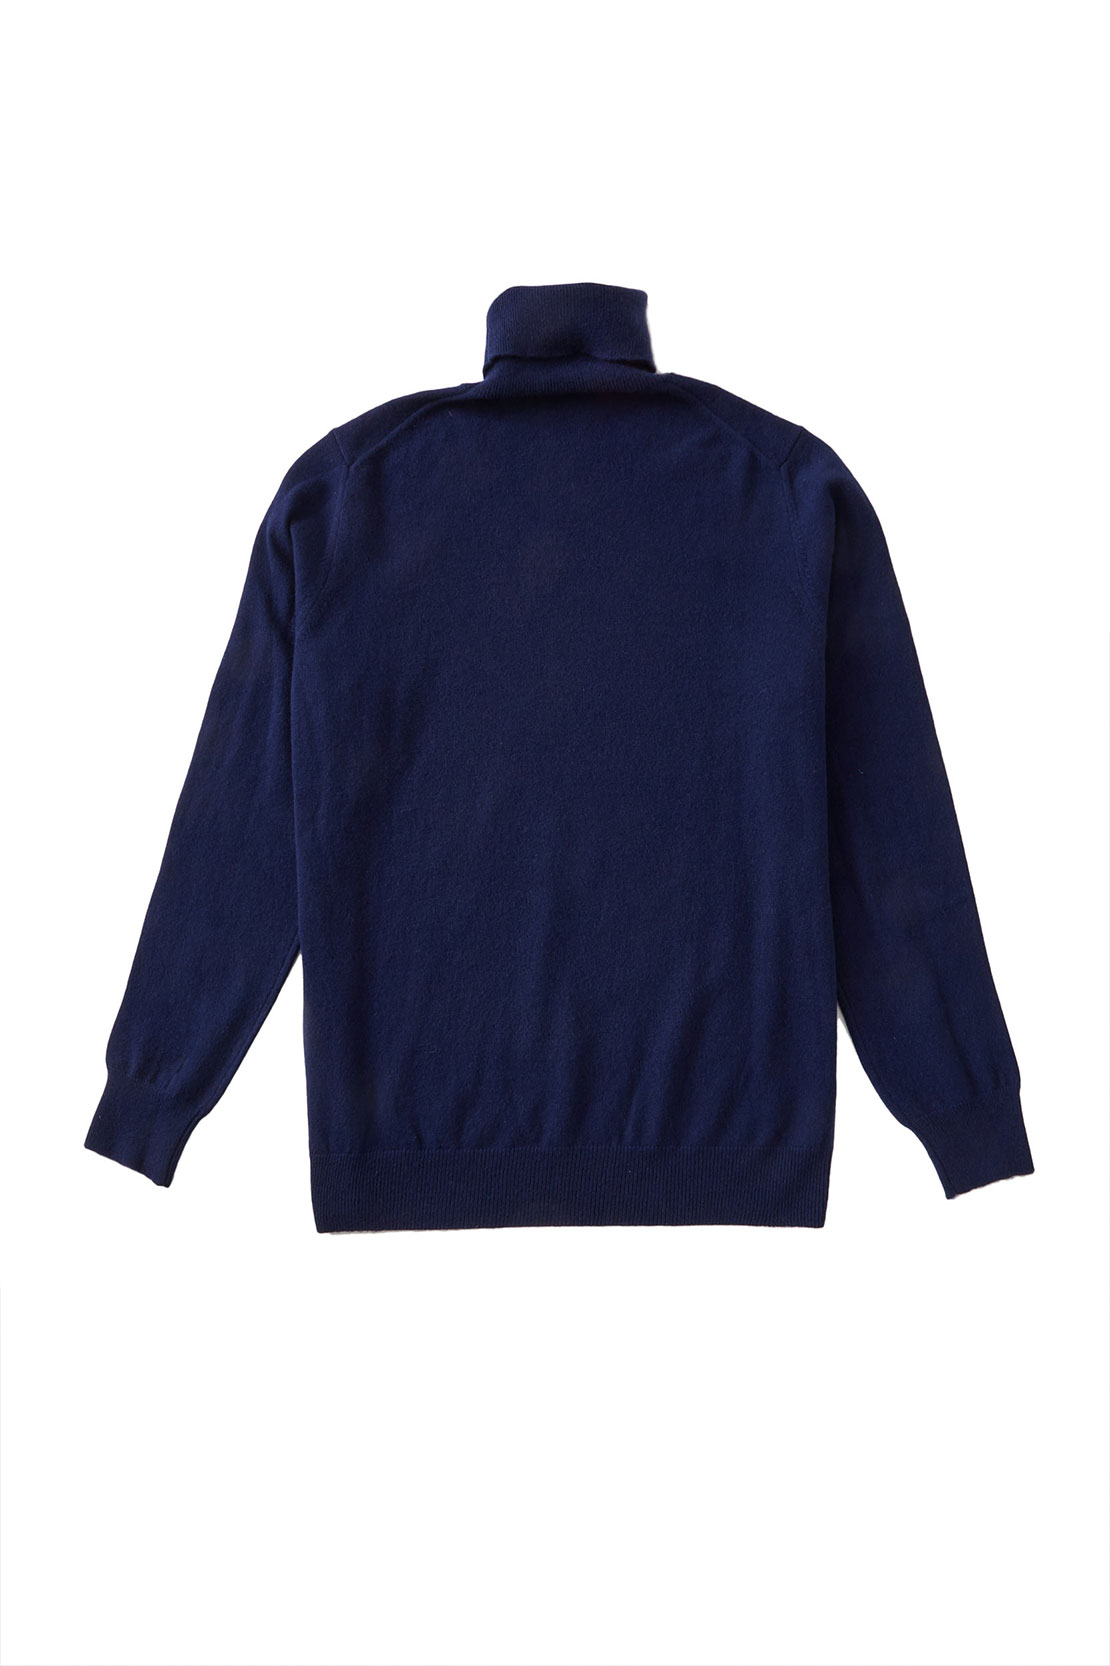 Dean blue 100% cashmere turtleneck sweater - Barbanera